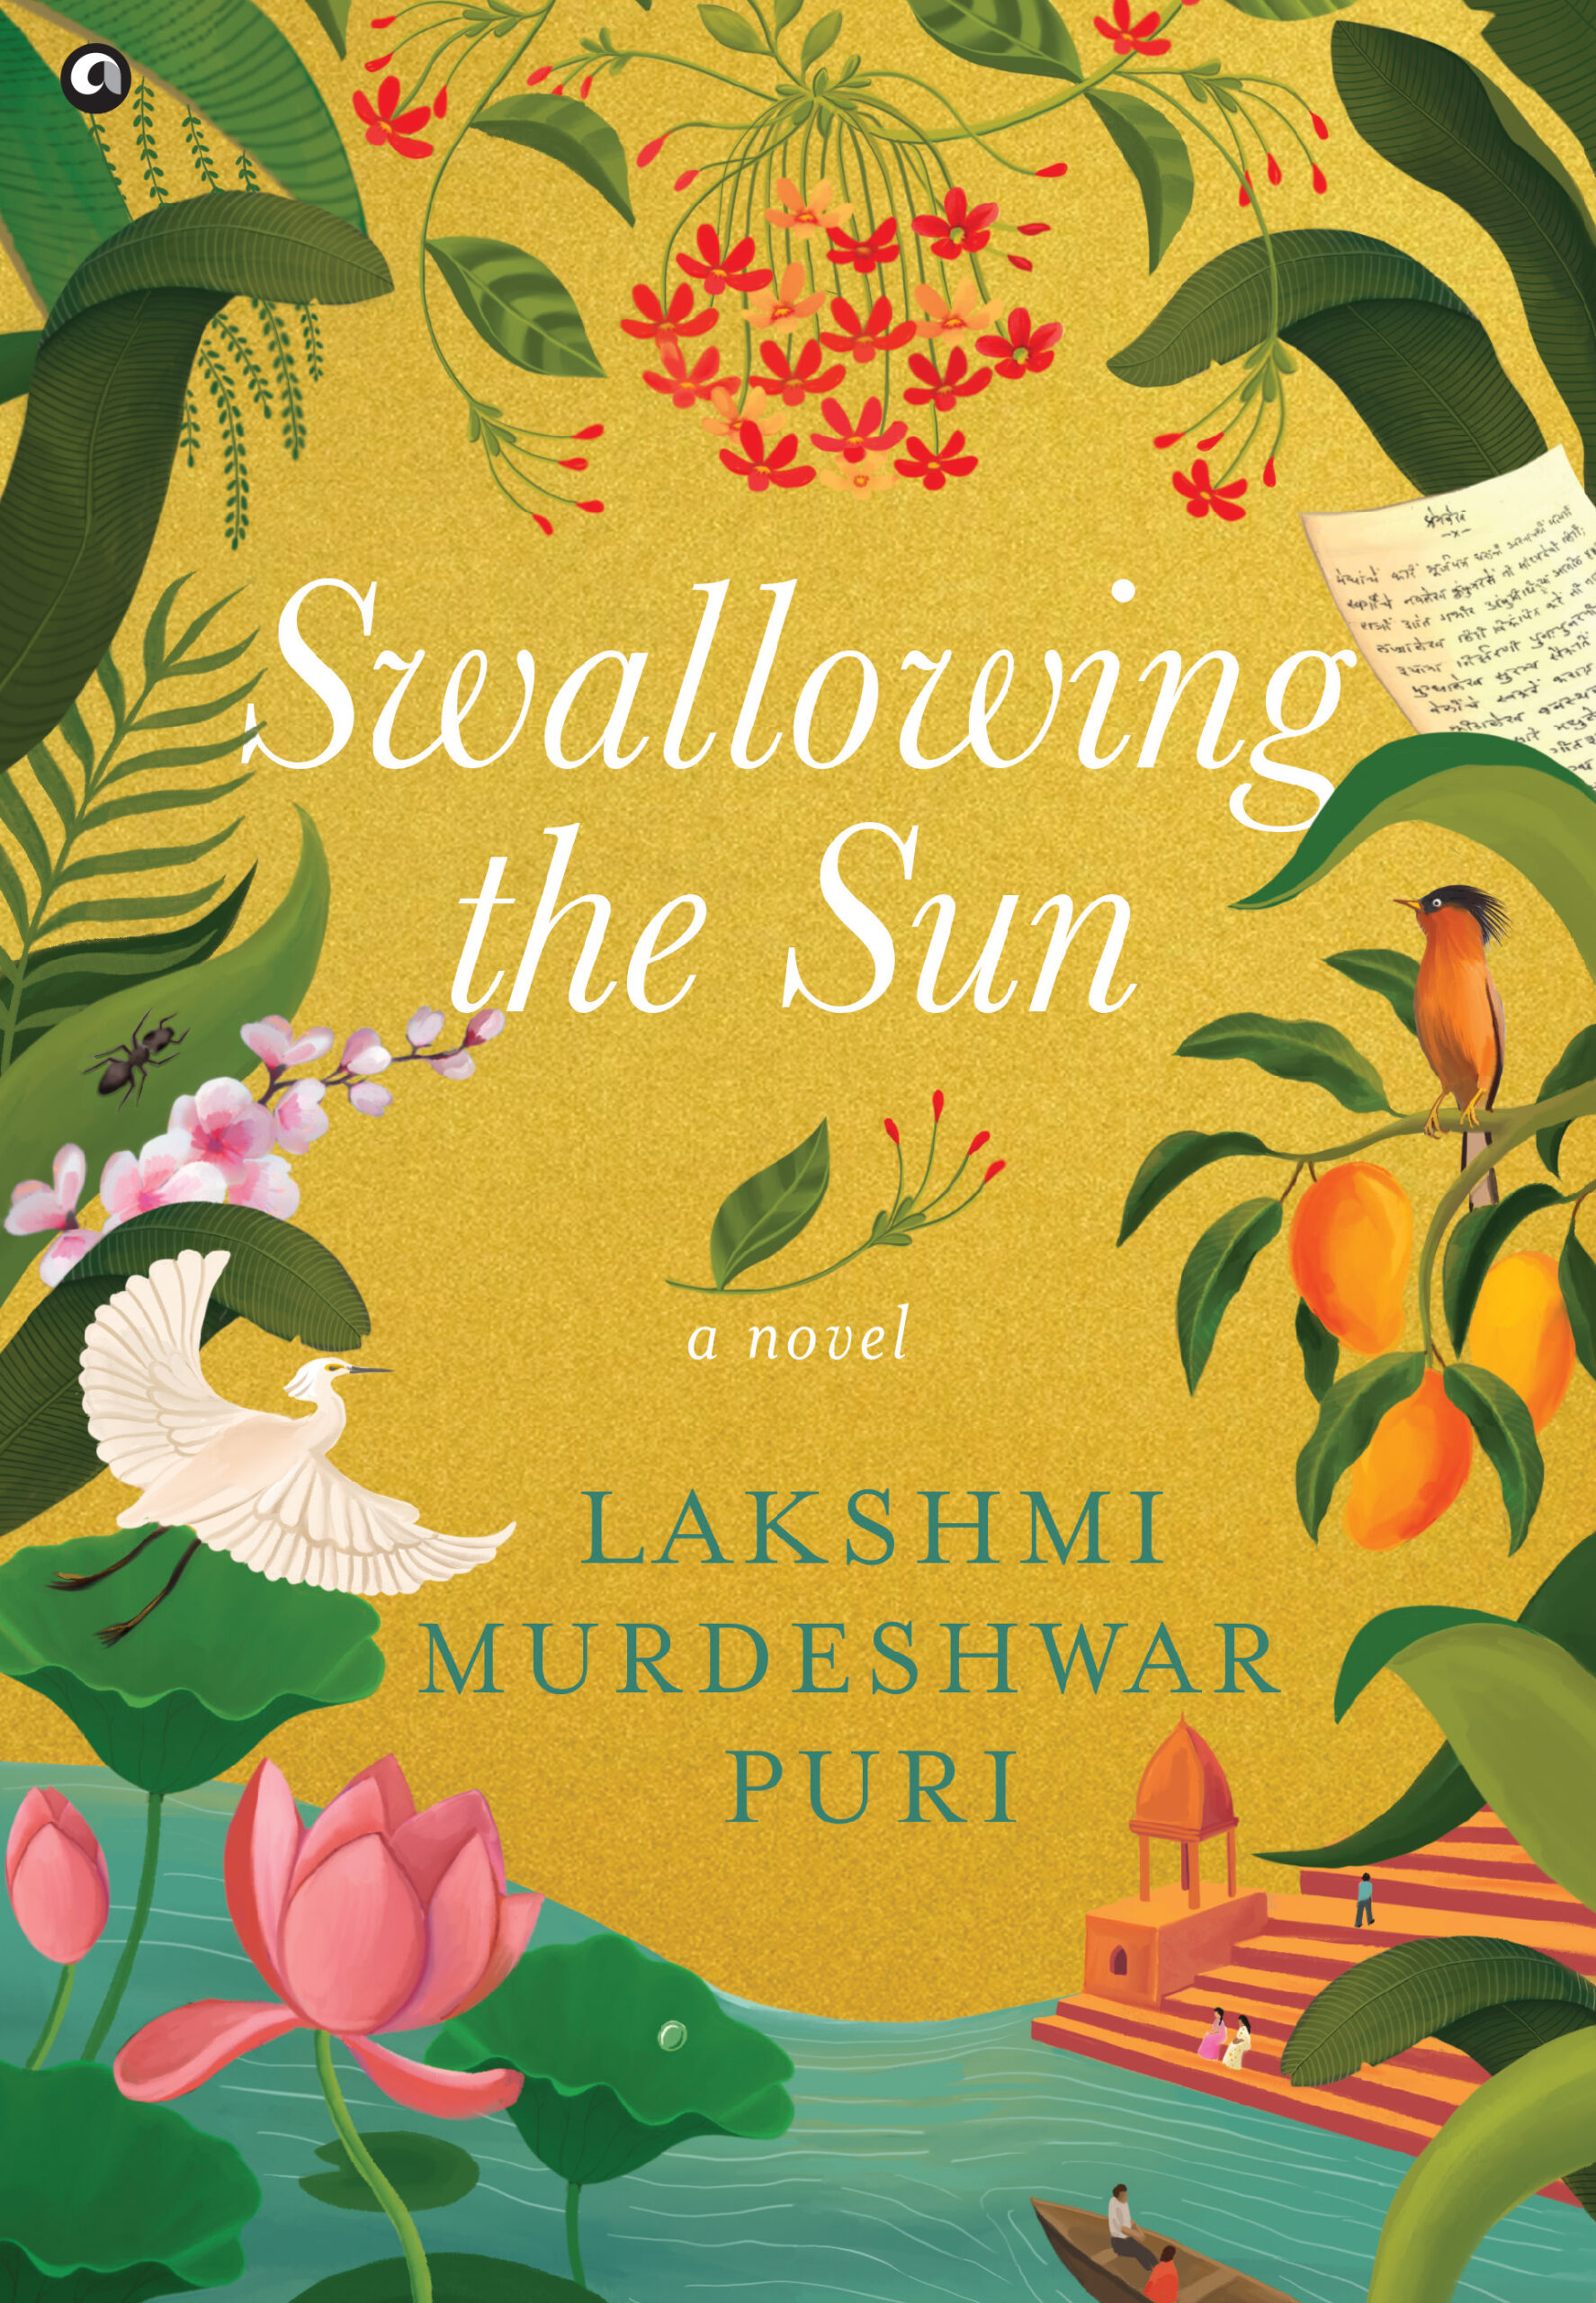 Swallowing the Sun: A Novel